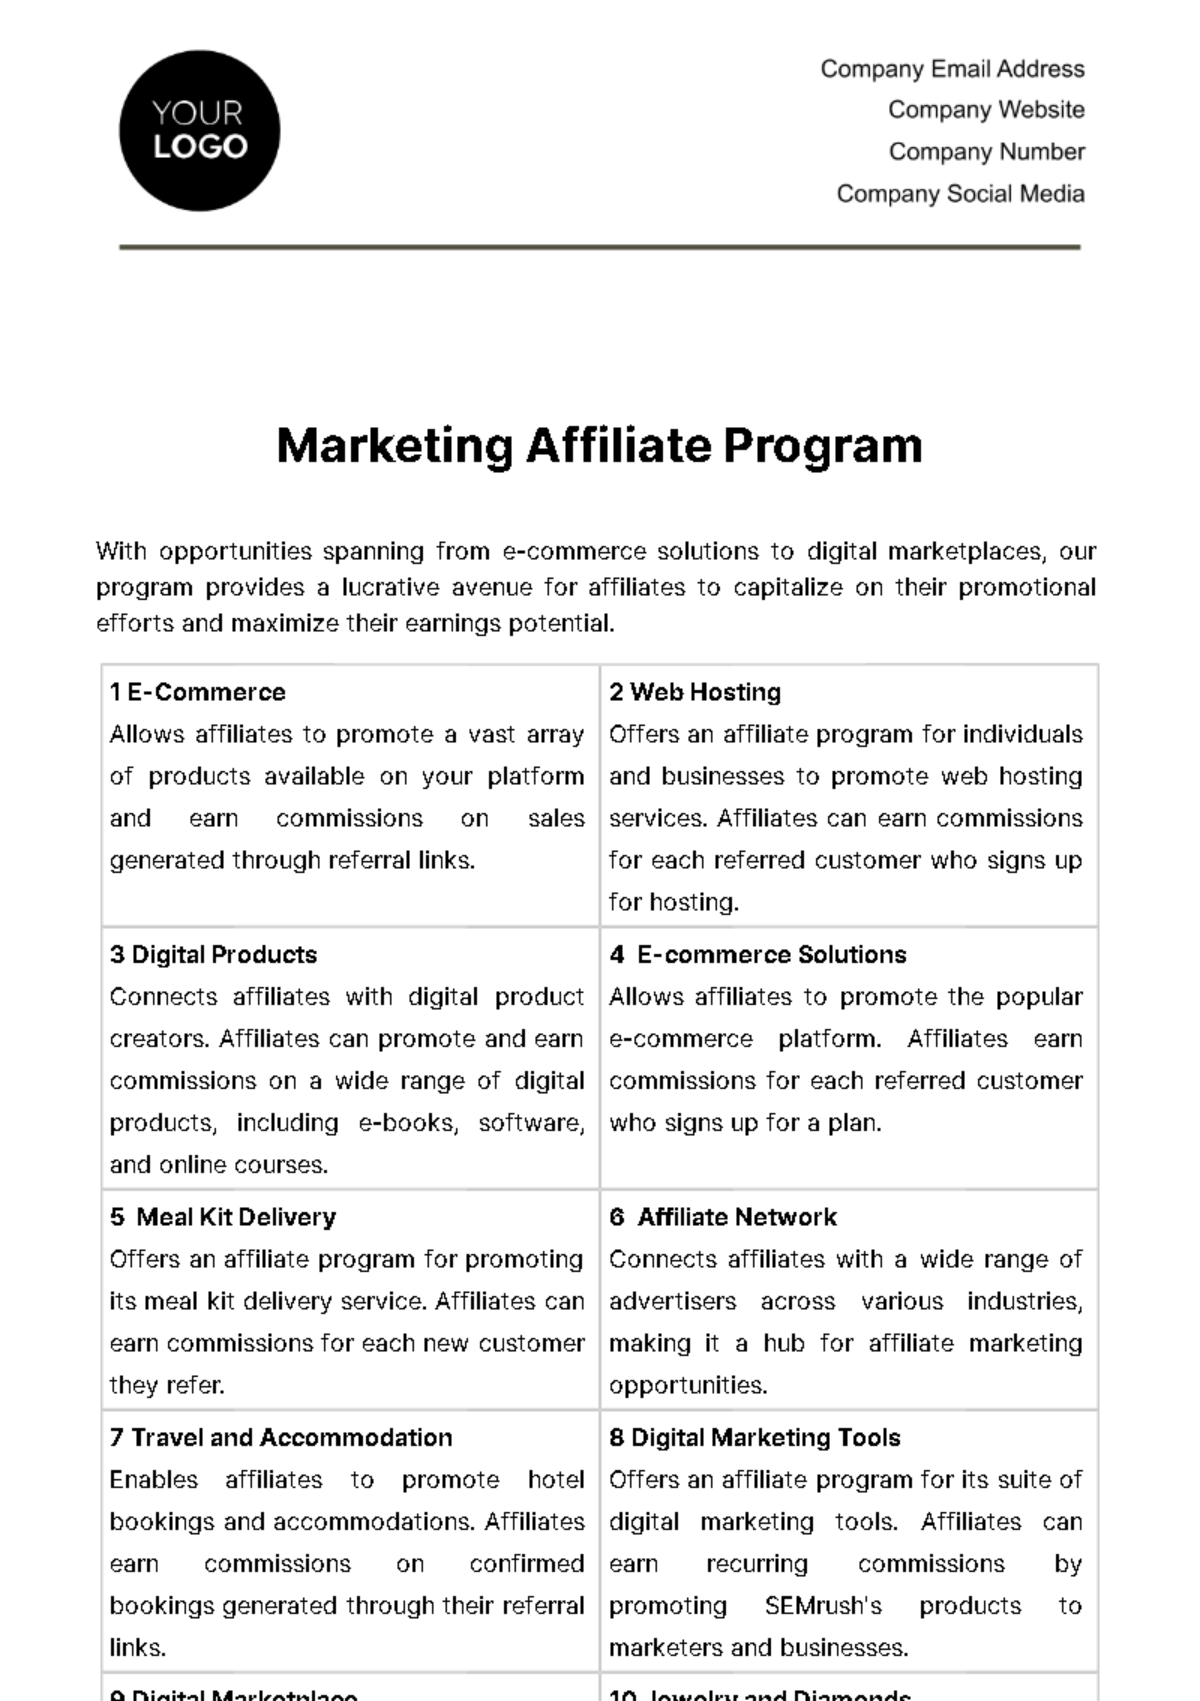 Marketing Affiliate Marketing Program Template